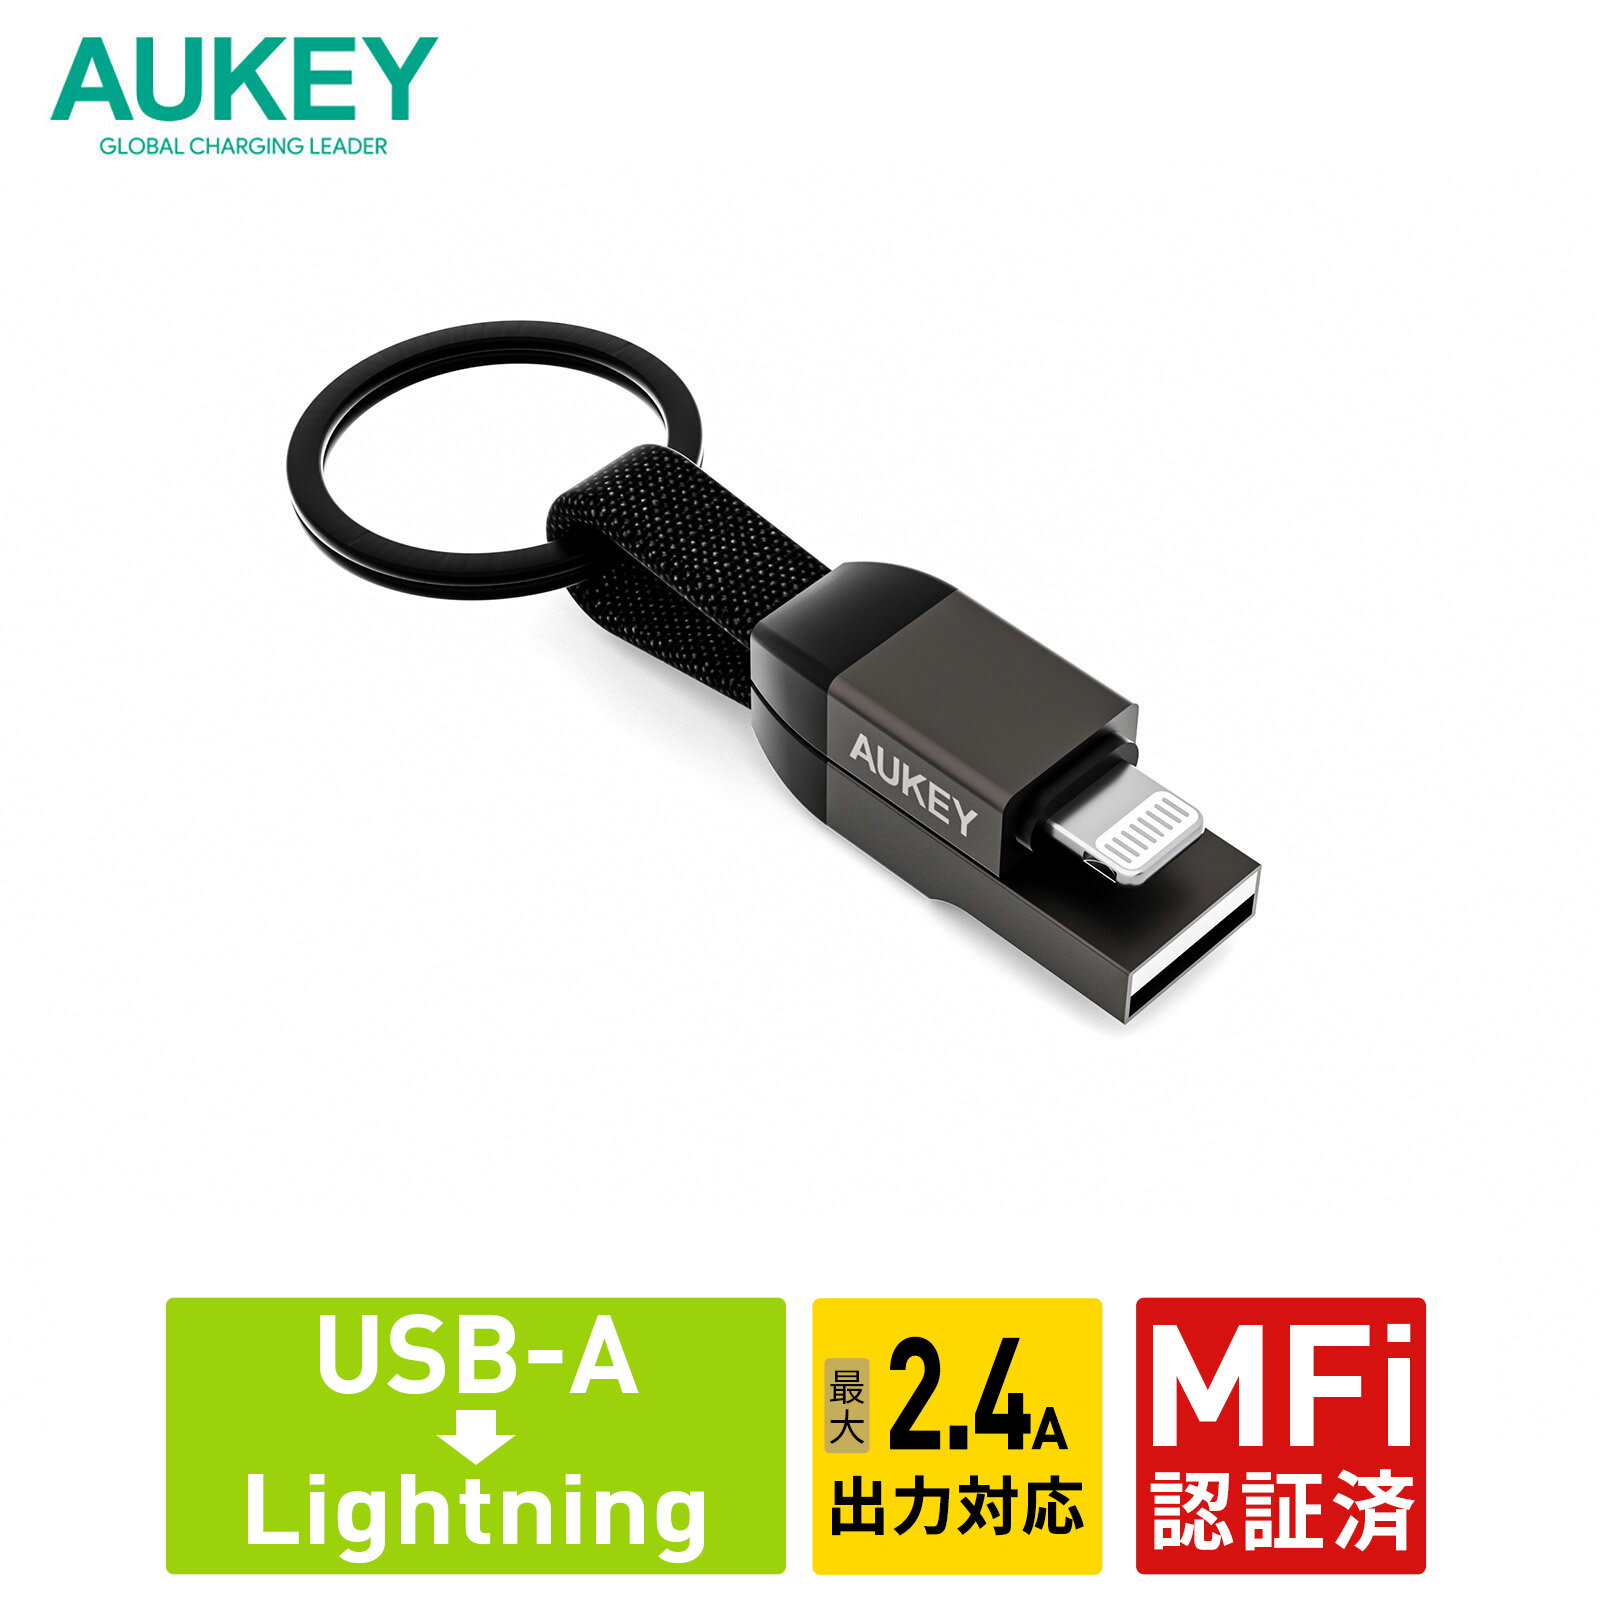 AUKEY USB Type-A to Lightning ストラップ型ケーブル 10cm Circlet Series CB-AKL6 ブラック 急速充電 キーホルダー型 キーリング ライトニングケーブル データ転送 480Mbps iPhone 2年保証